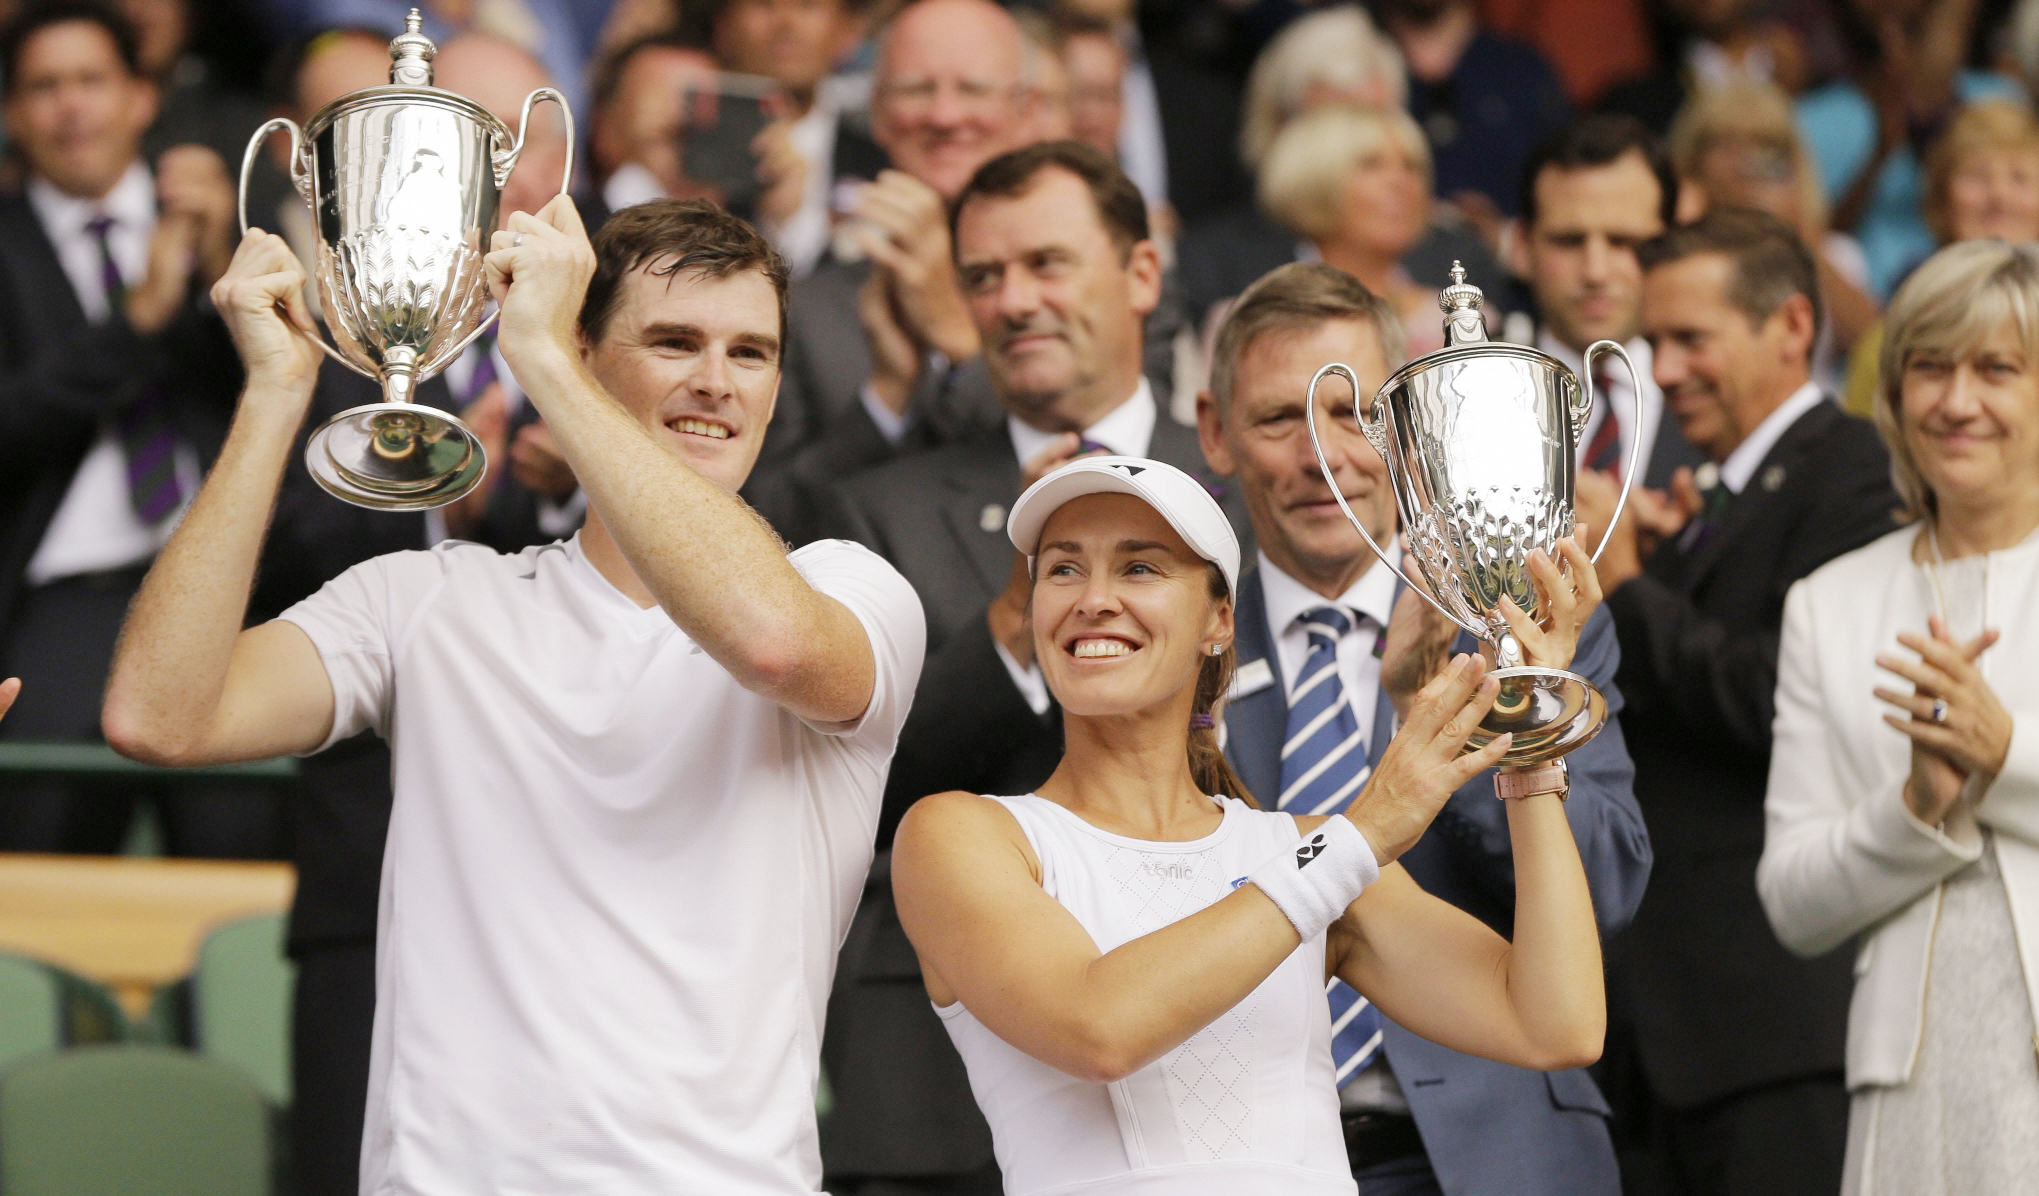 Jamie Murray, Martina Hingis, Doubles Champion, Tennis, Win